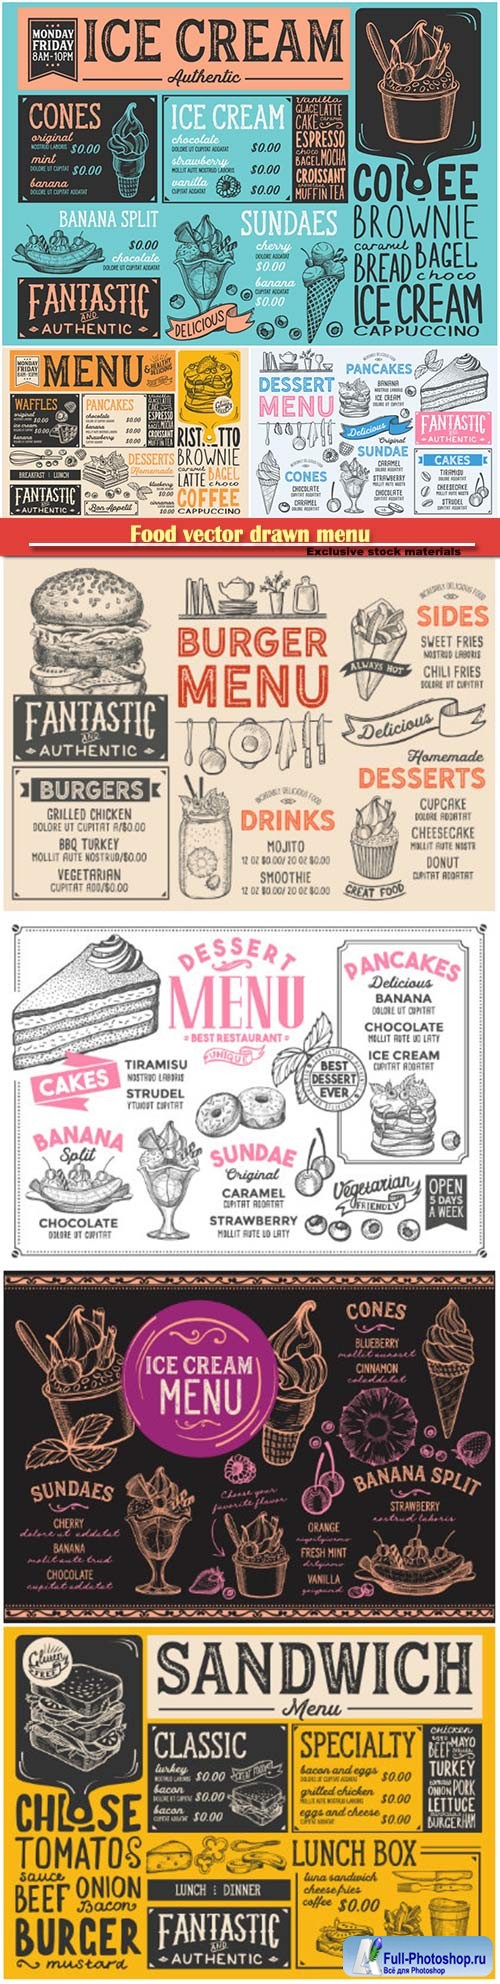 Food vector drawn menu, fast food, ice cream, cocktails, desserts